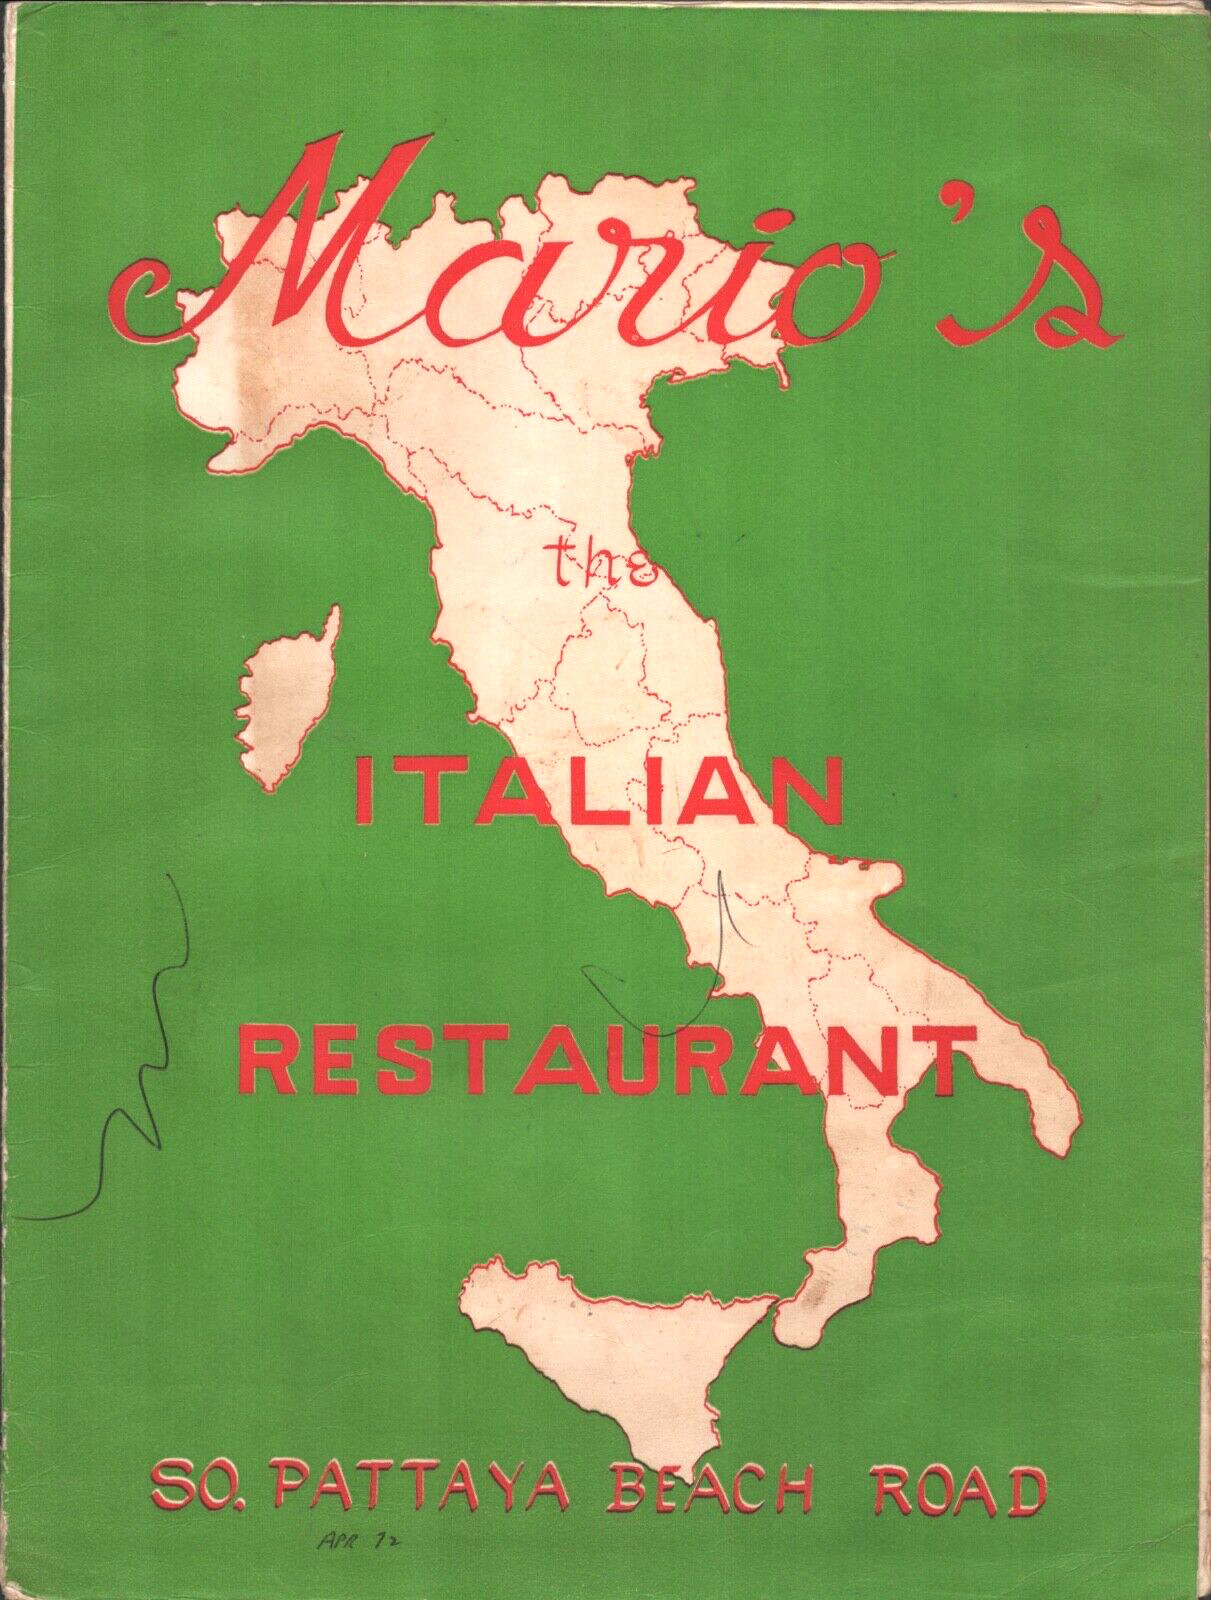 1970 MARIO'S THE ITALIAN RESTAURANT vintage dinner menu PATTAYA BEACH, THAILAND